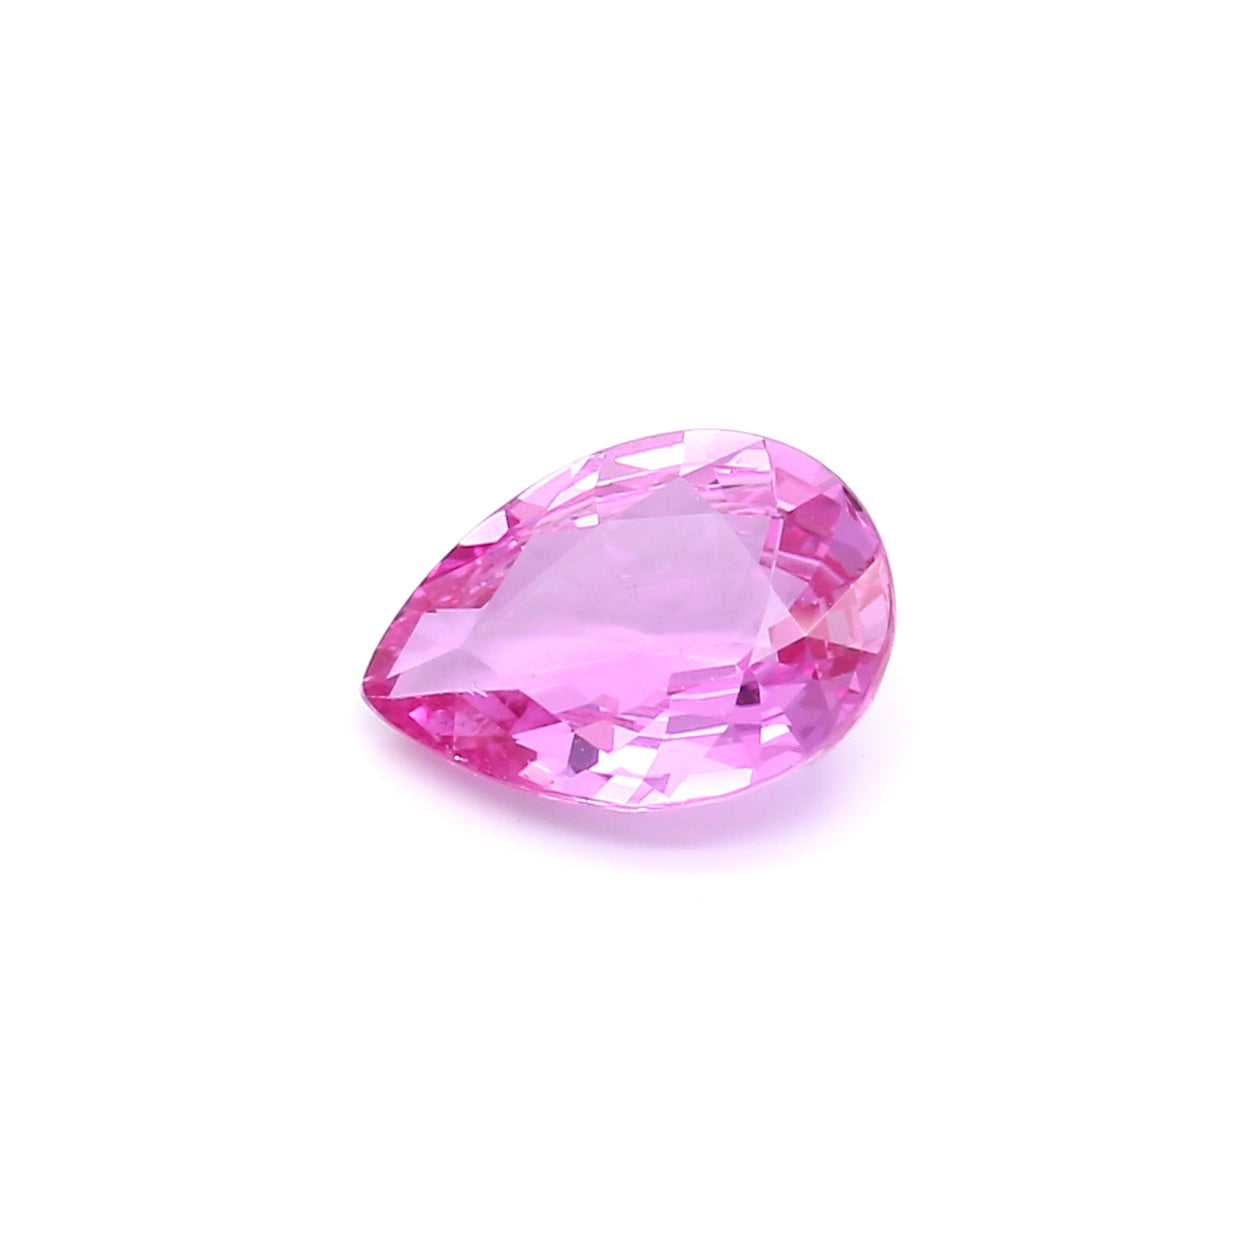 2.01ct Pink, Pear Shape Sapphire, Heated, Madagascar - 9.72 x 6.90 x 3.60mm